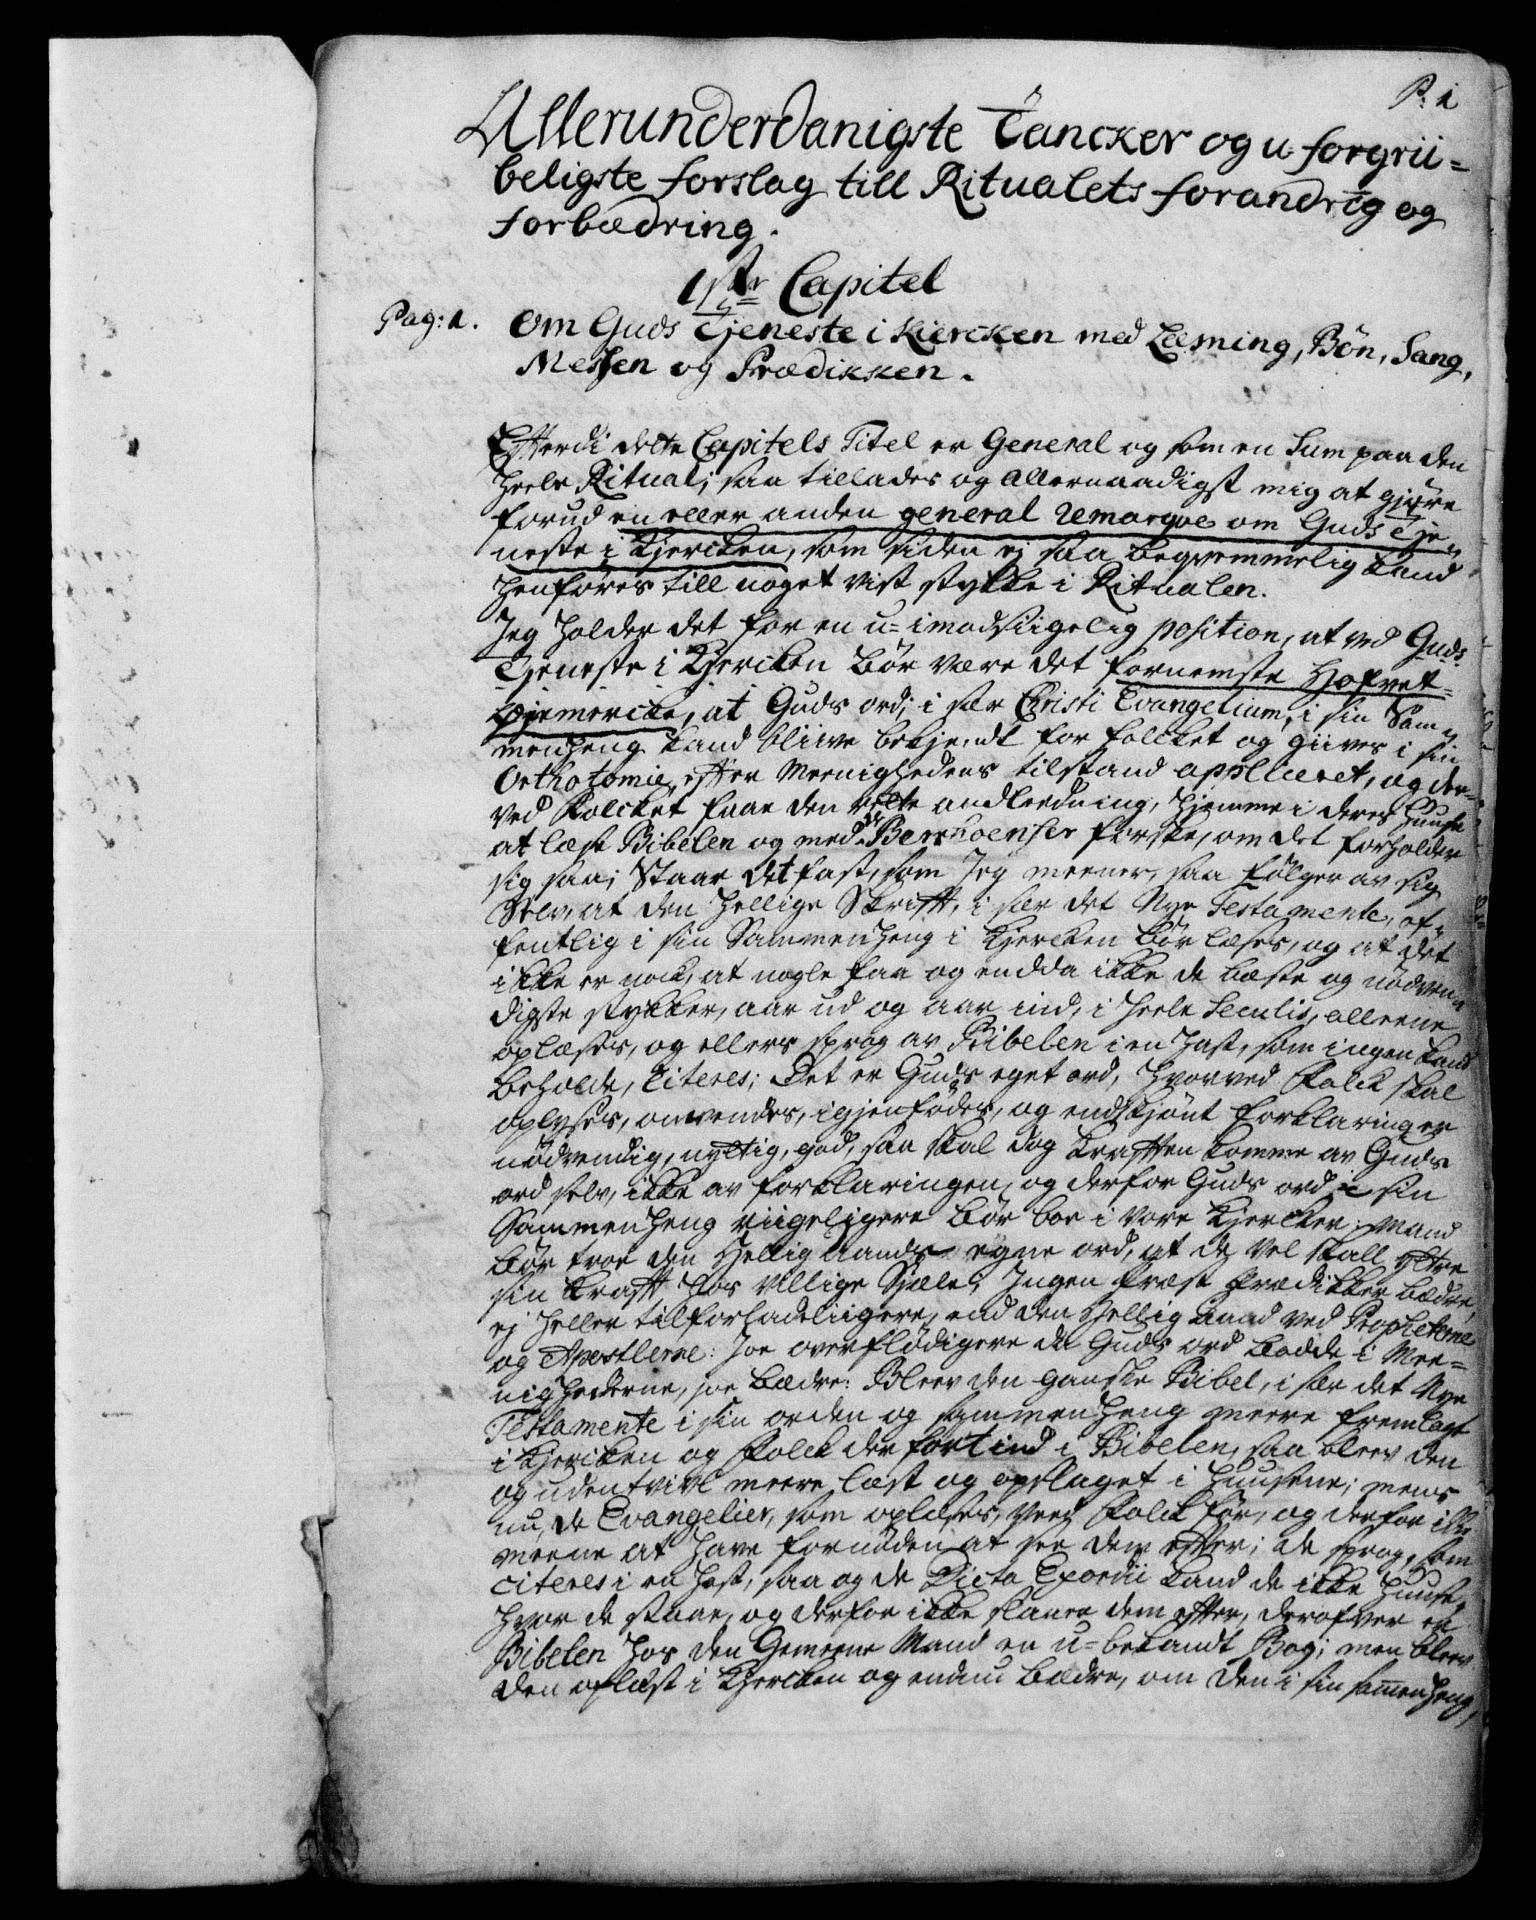 Generalkirkeinspektionskollegiet, DRA/A-0008/F4-13/F4-13: Dokumenter til ritualets revision, 1735